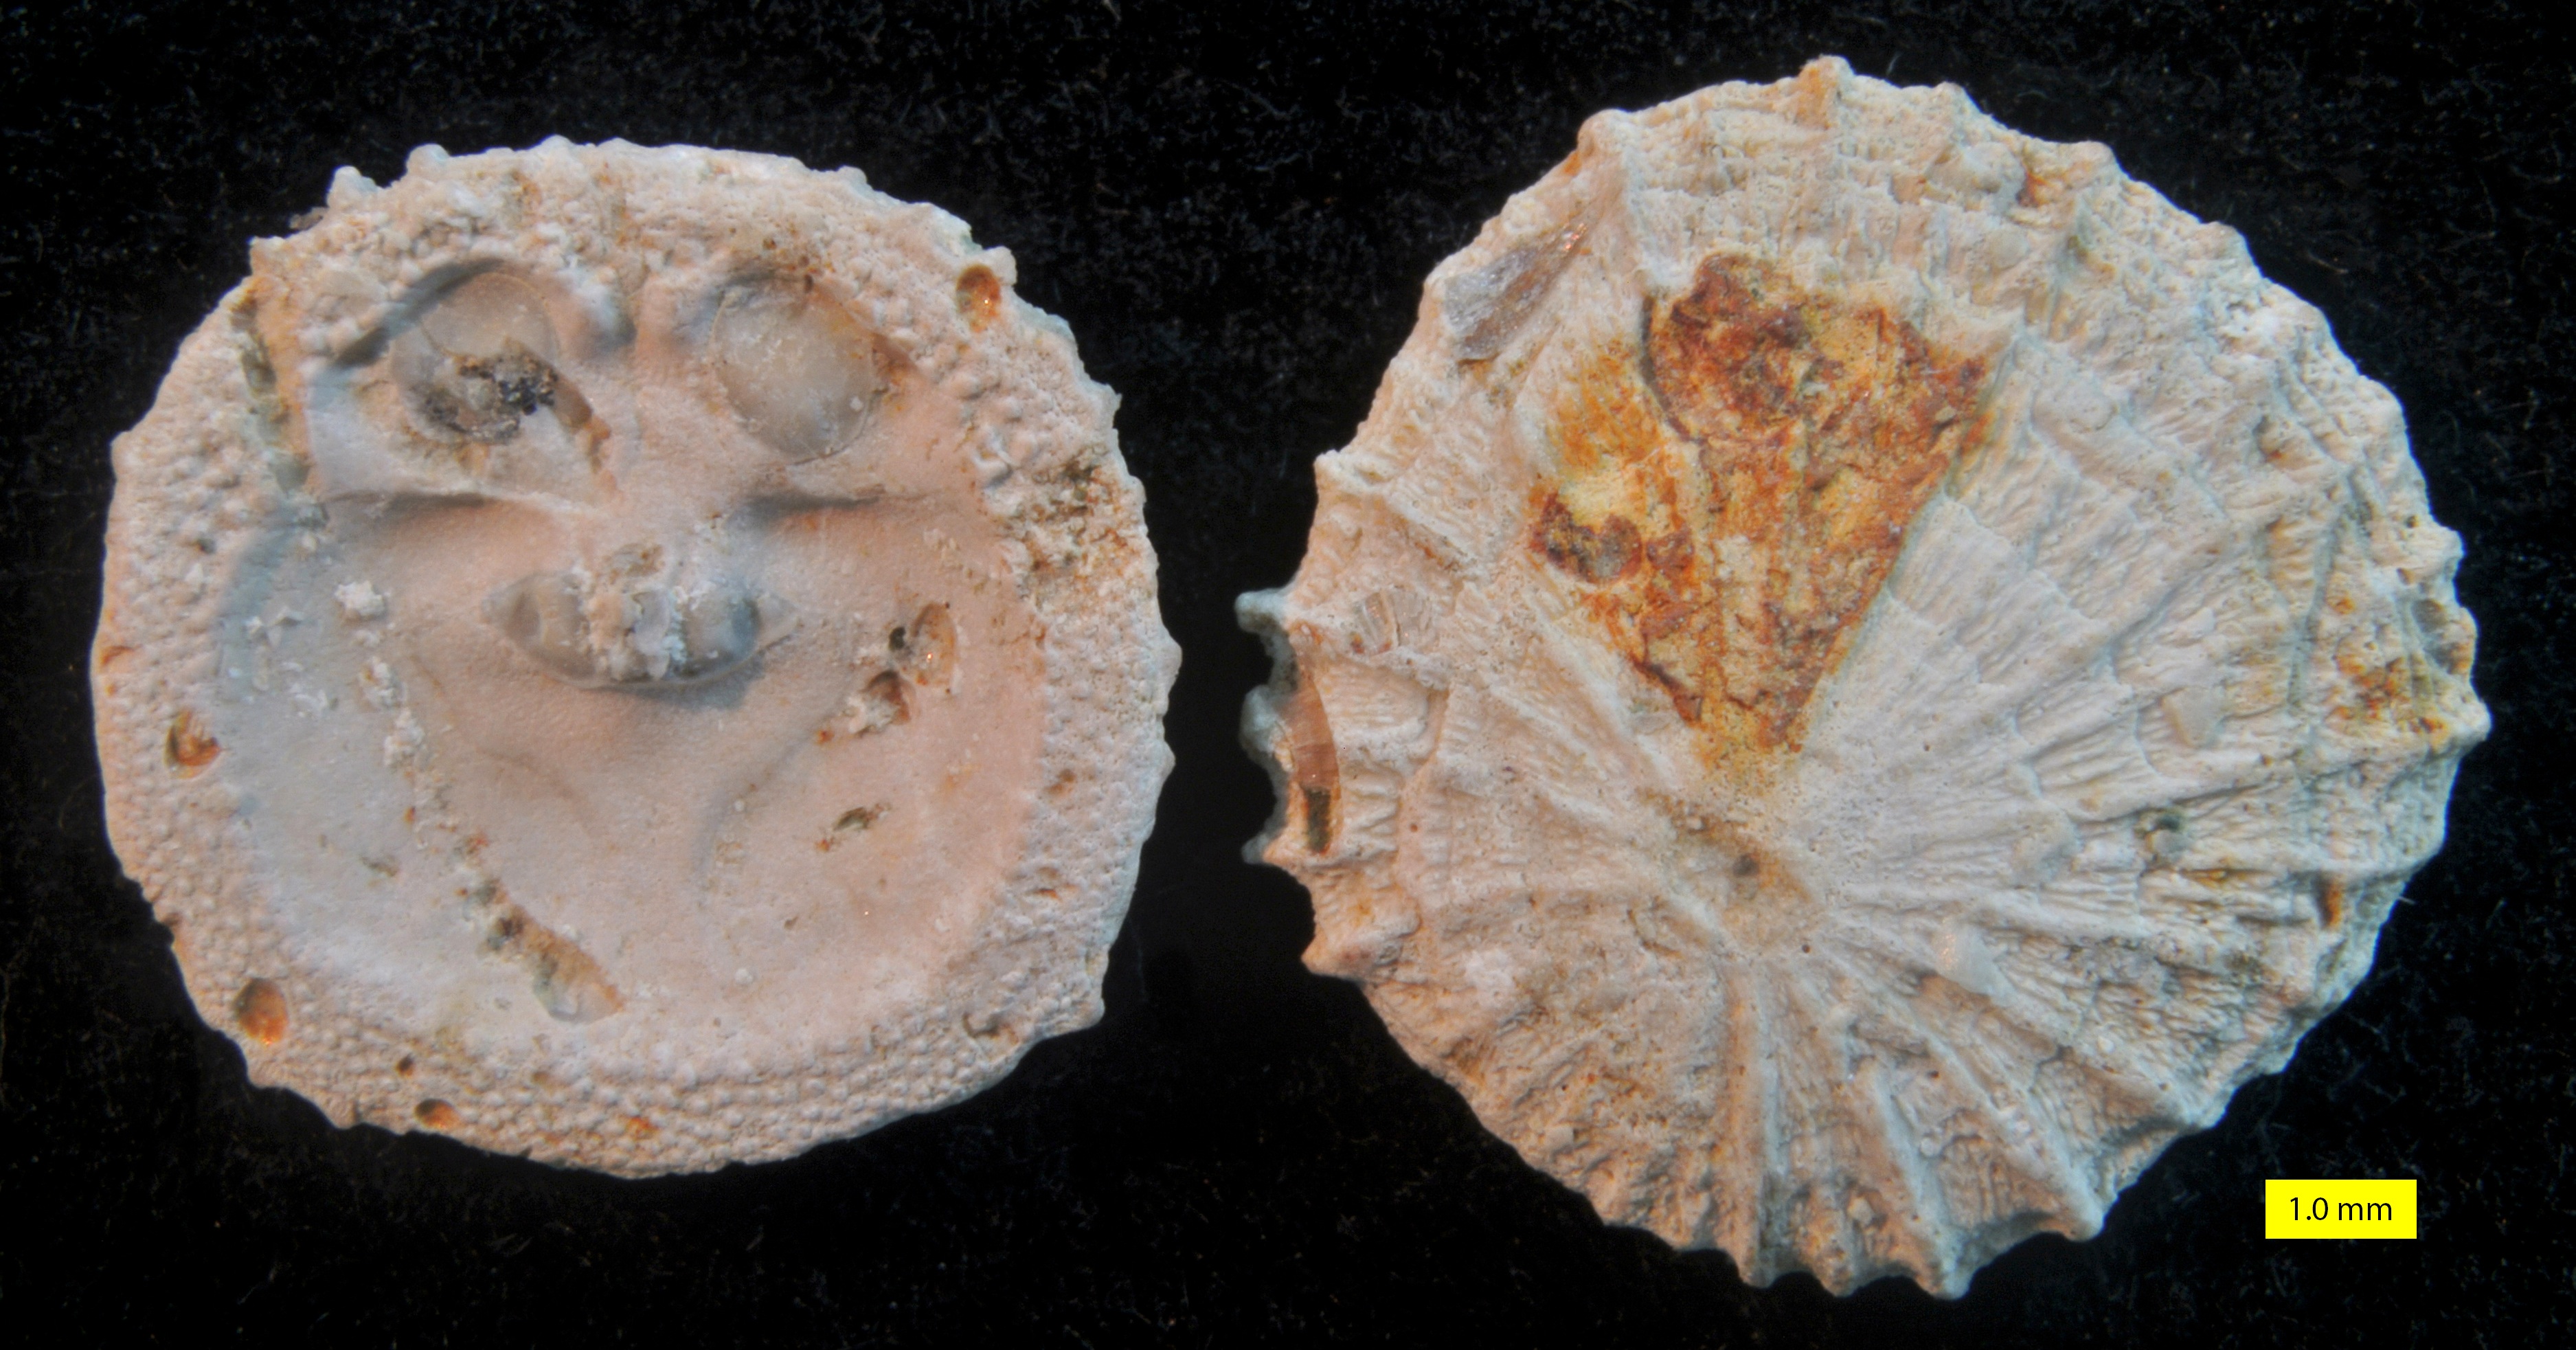 Isocrania costata, a craniid brachiopod